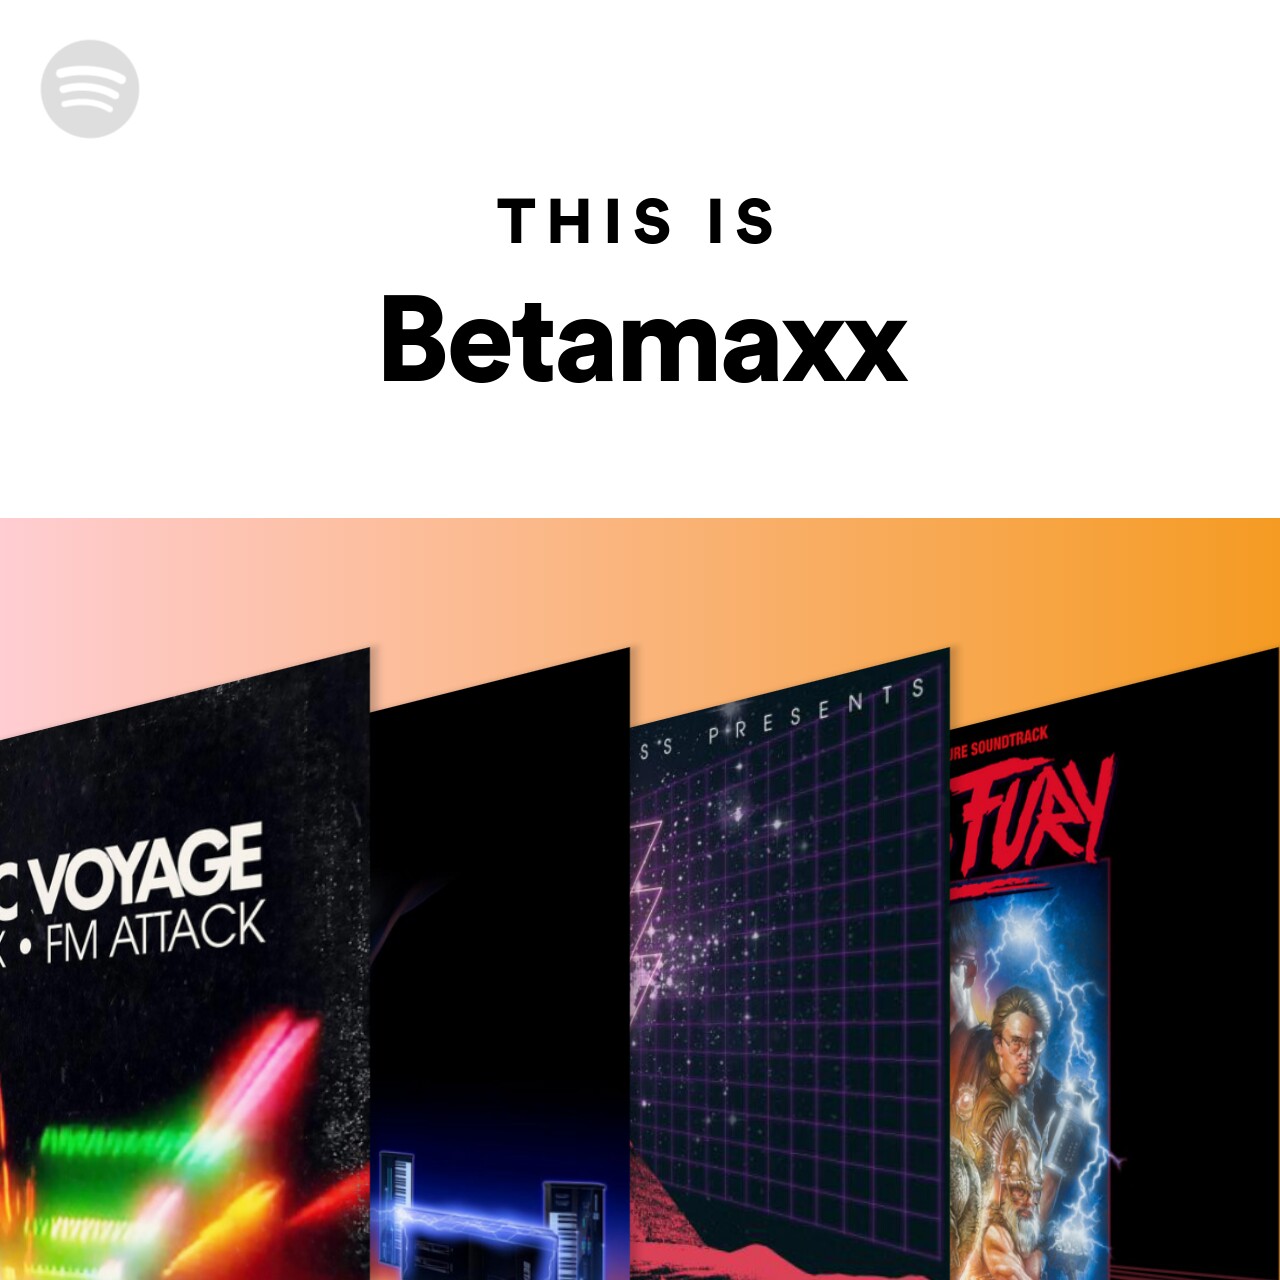 This Is Betamaxx